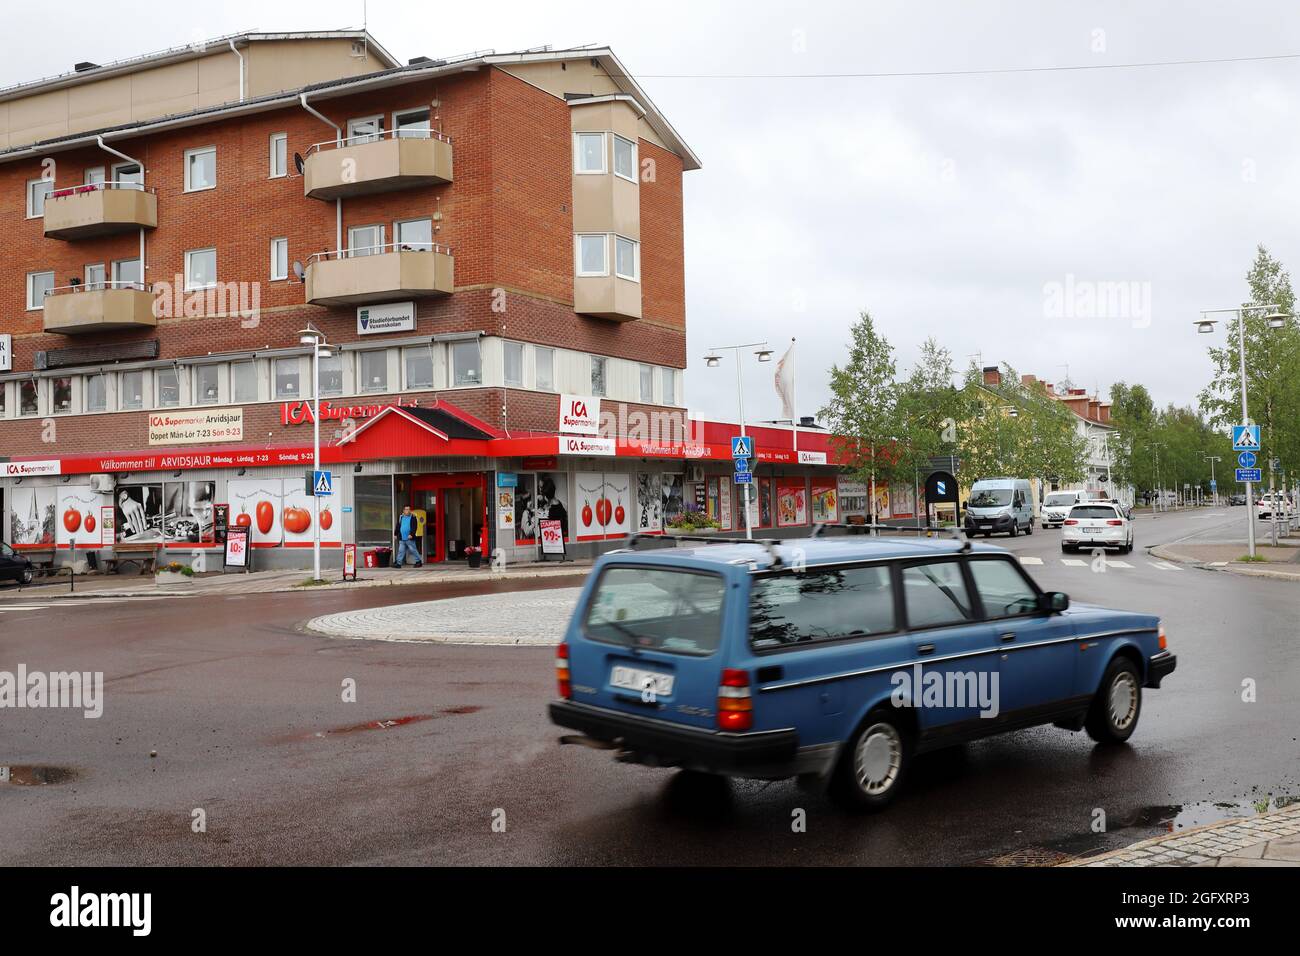 Arvidsjaur, Sweden - August 25, 2021: Street view of the Arvisjaur city center at the ICA supermarket. Stock Photo